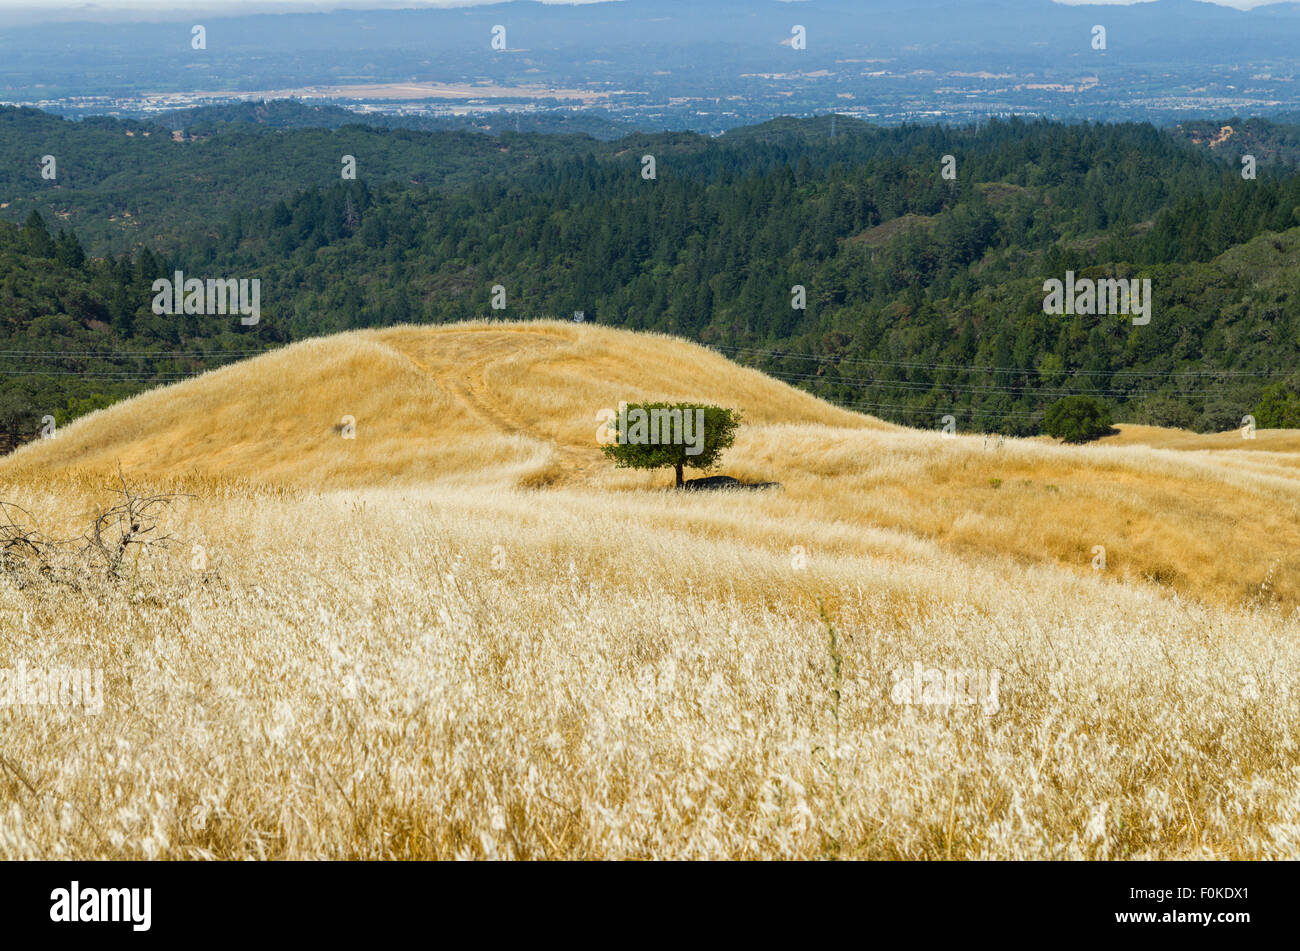 Pepperwood Presserve Santa Rosa and Healdsburg Sonoma County California Stock Photo